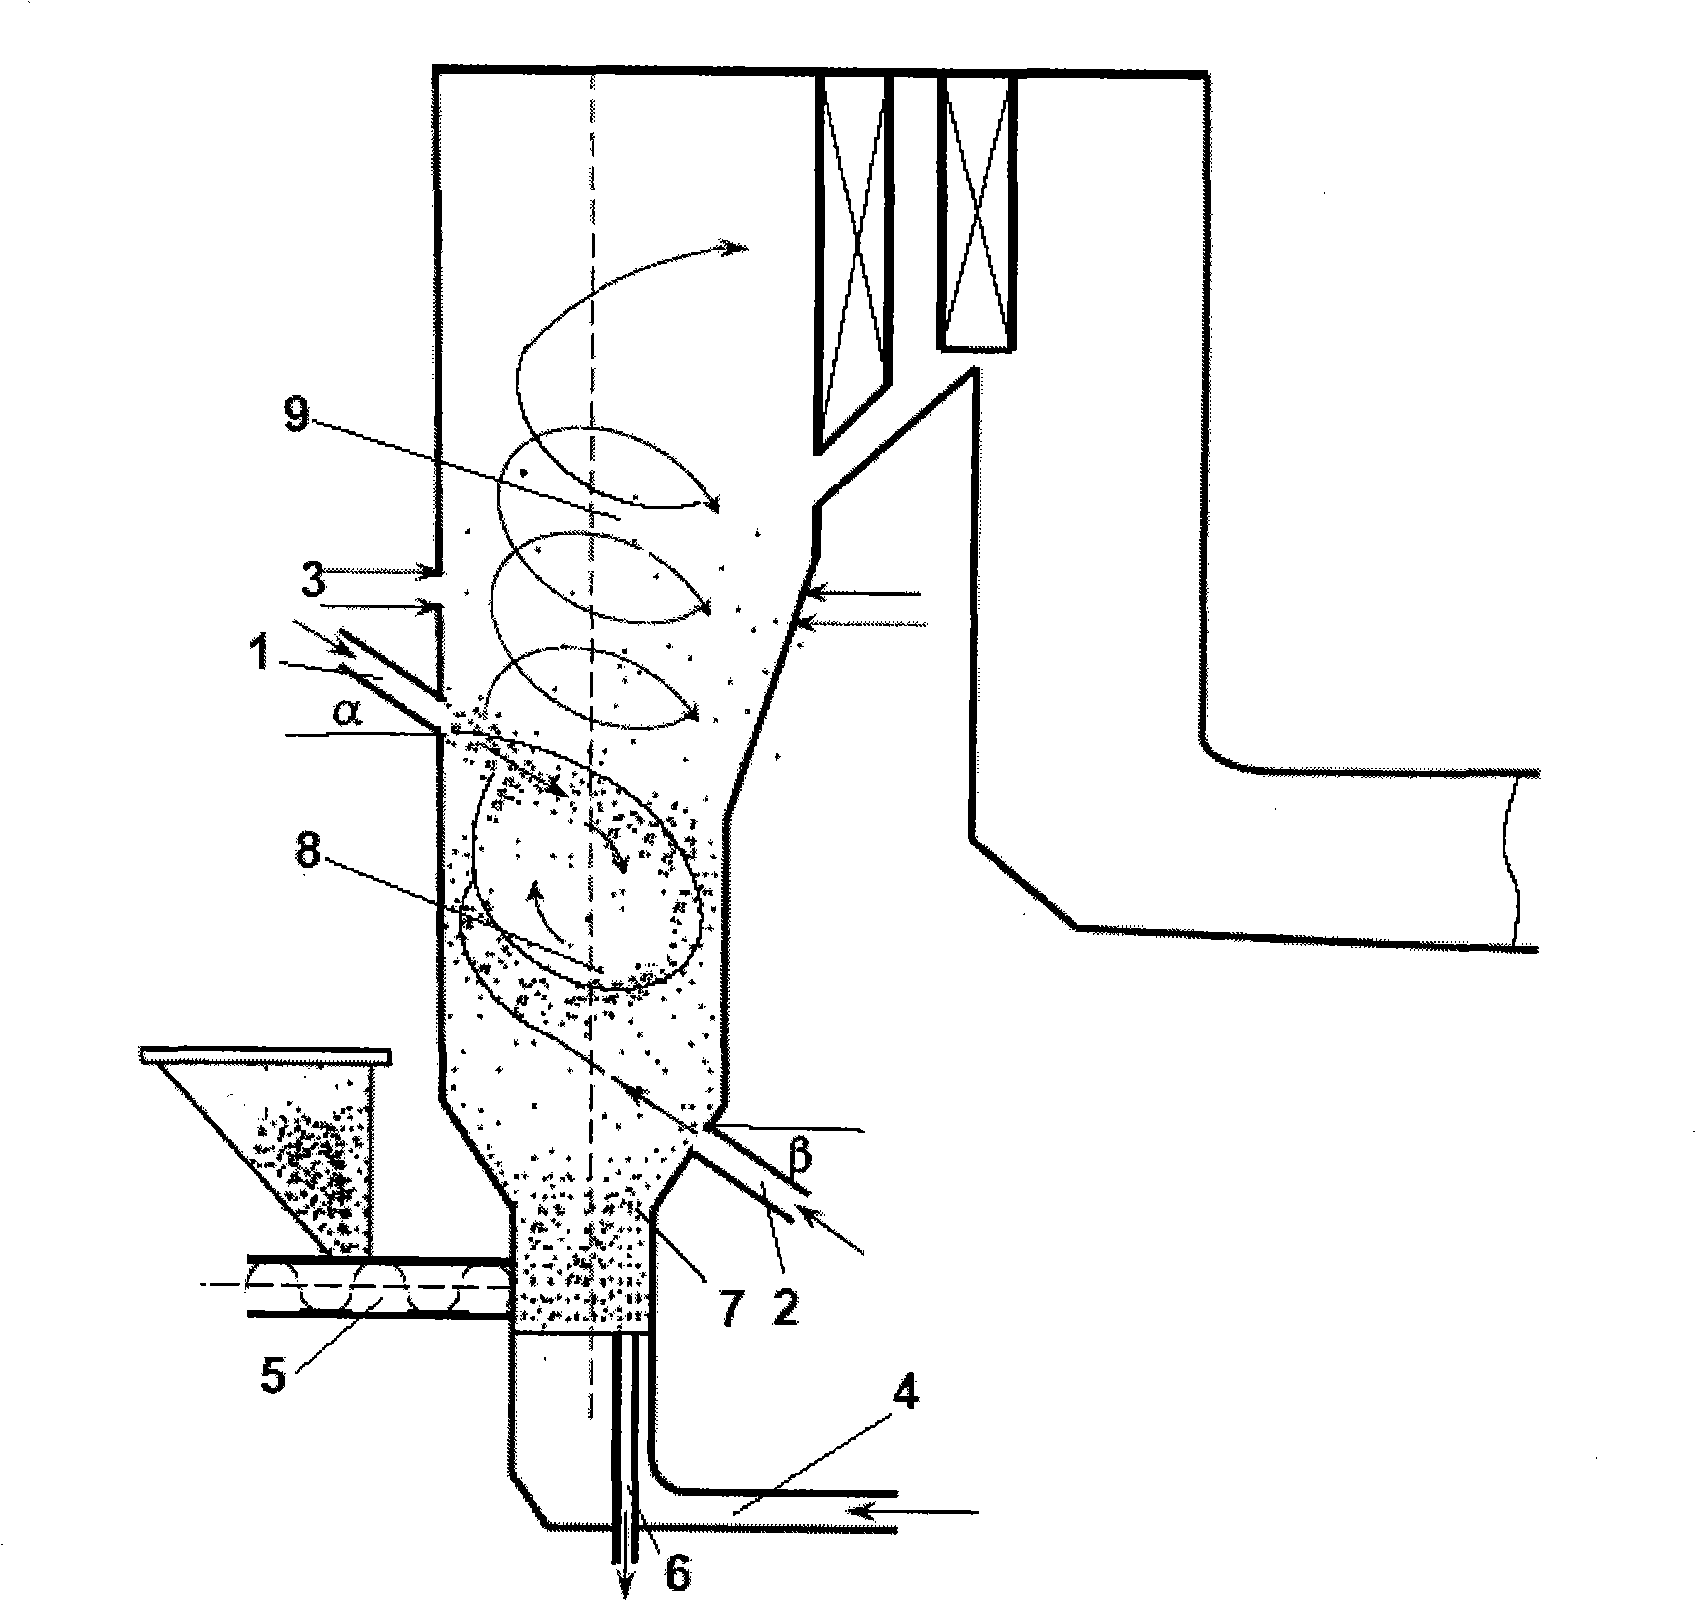 Fluidization-suspension combined combustion boiler